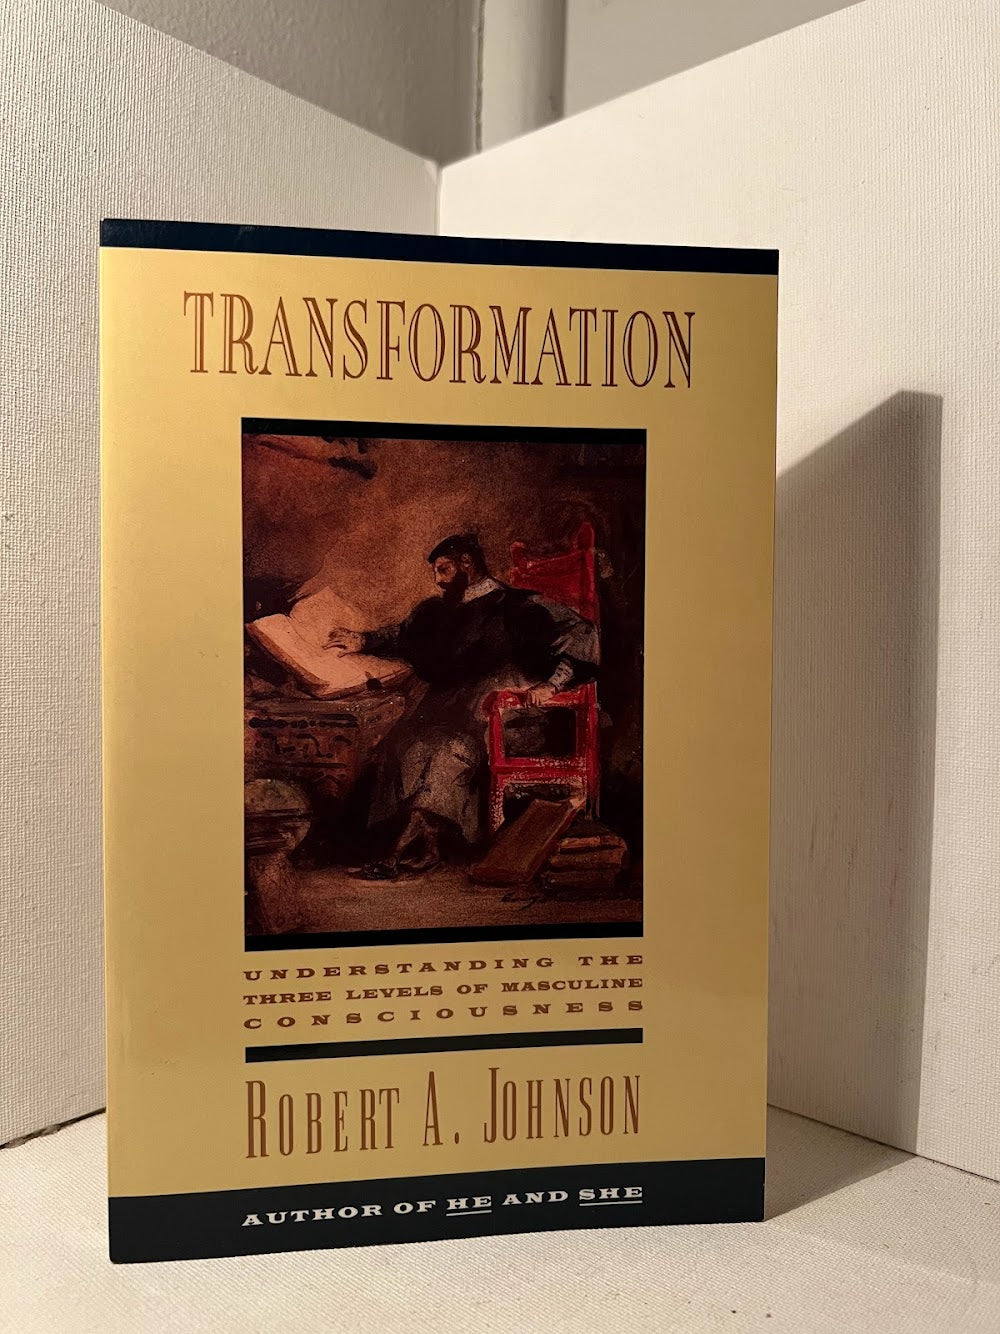 Transformation by Robert A. Johnson